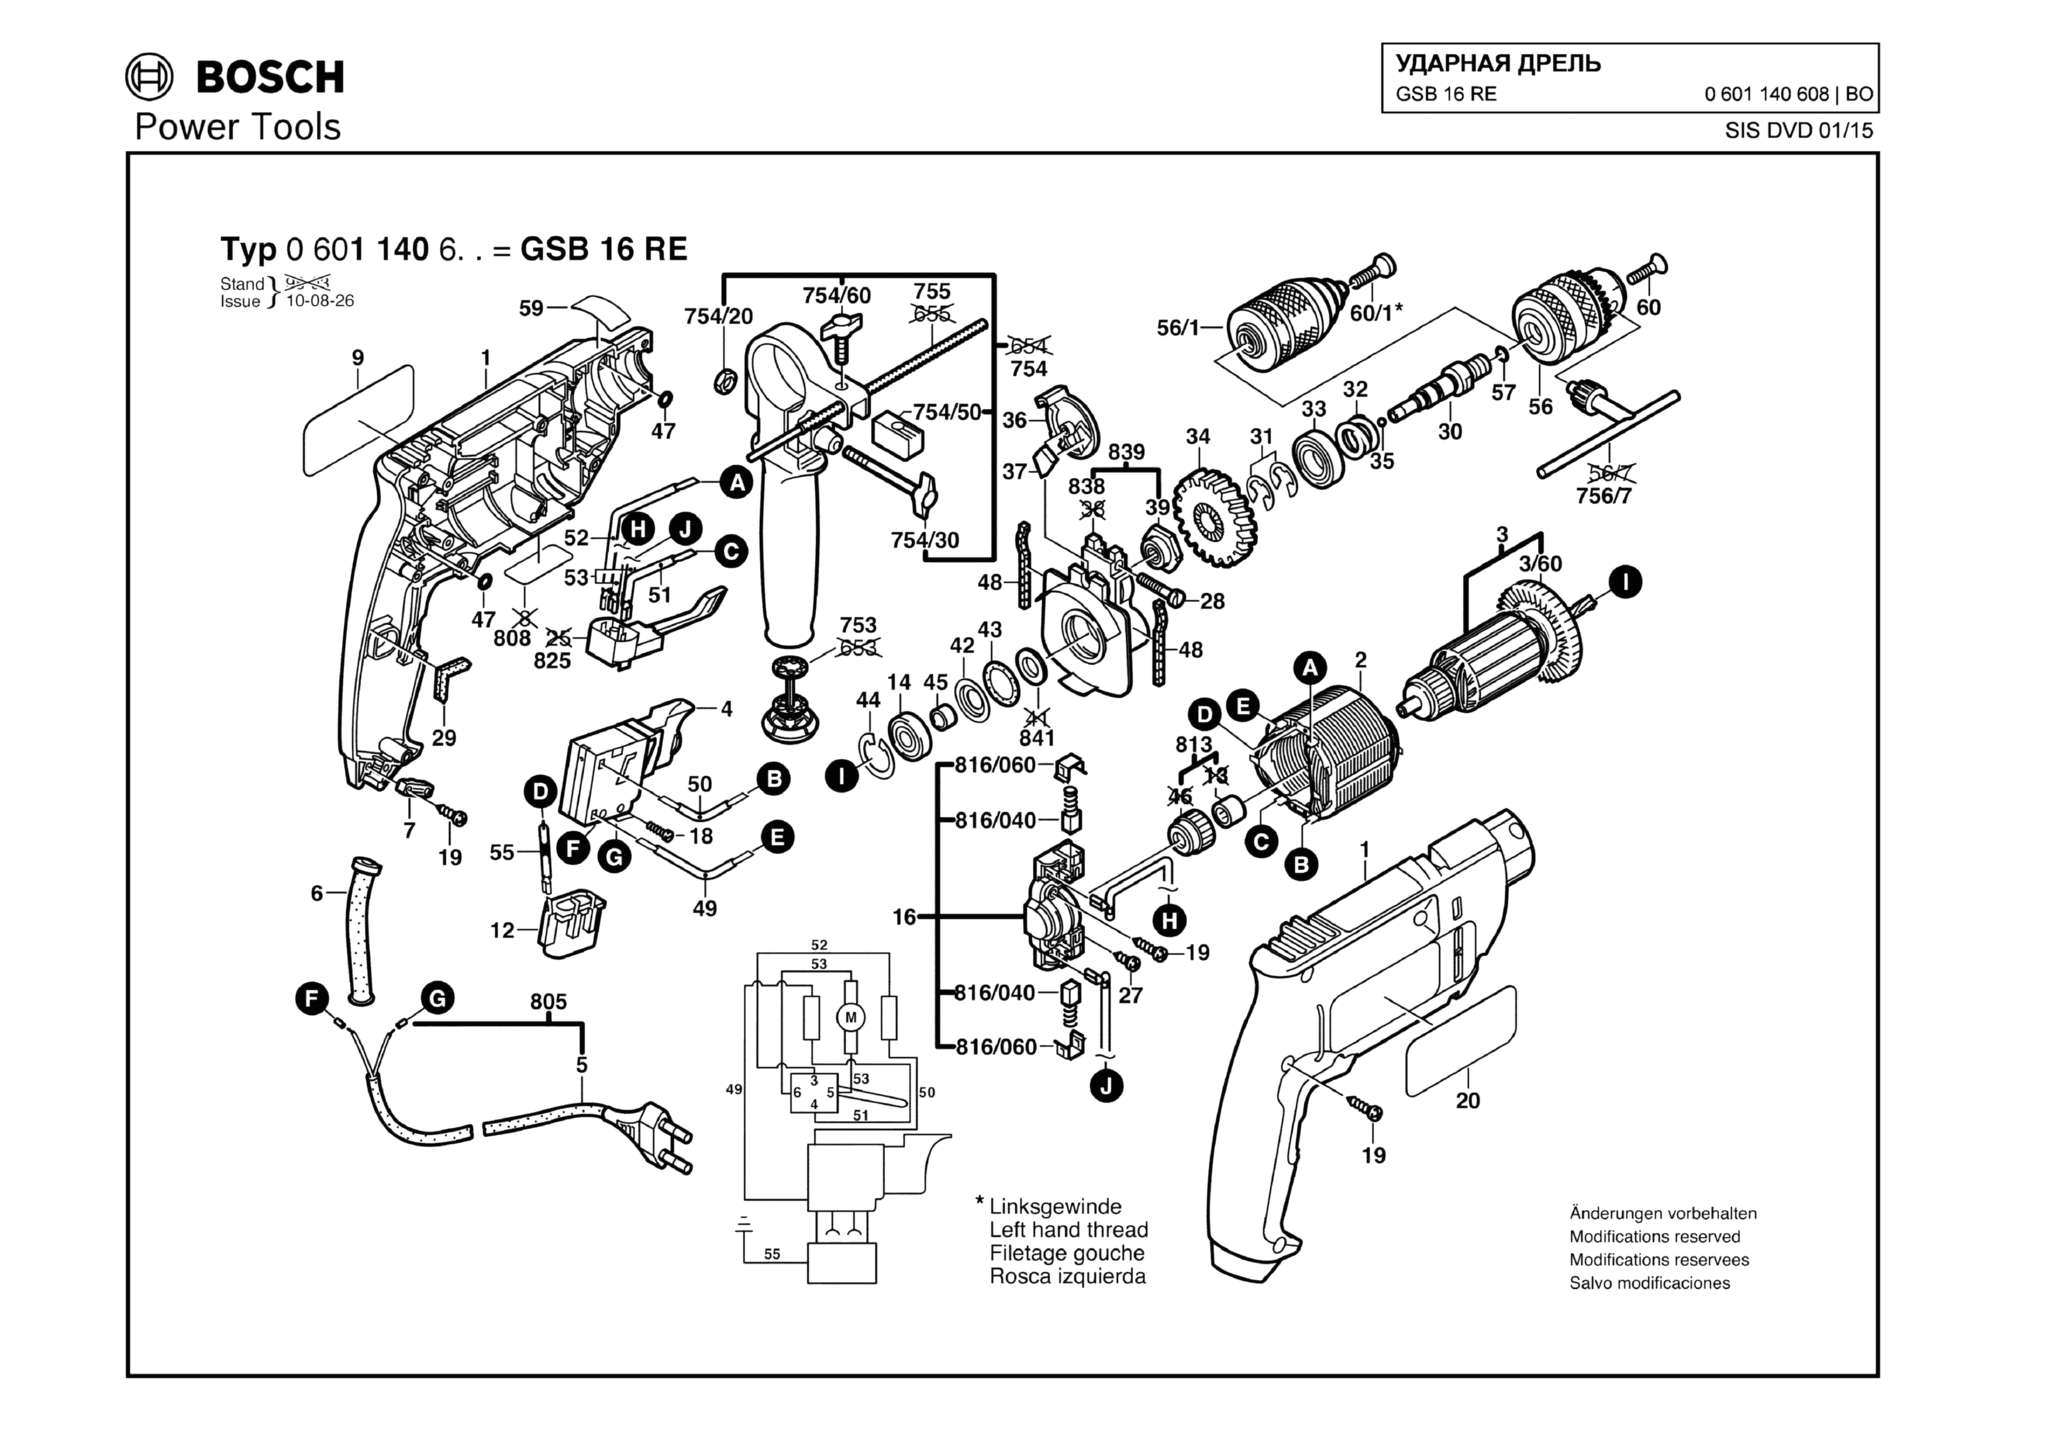 Запчасти, схема и деталировка Bosch GSB 16 RE (ТИП 0601140608)